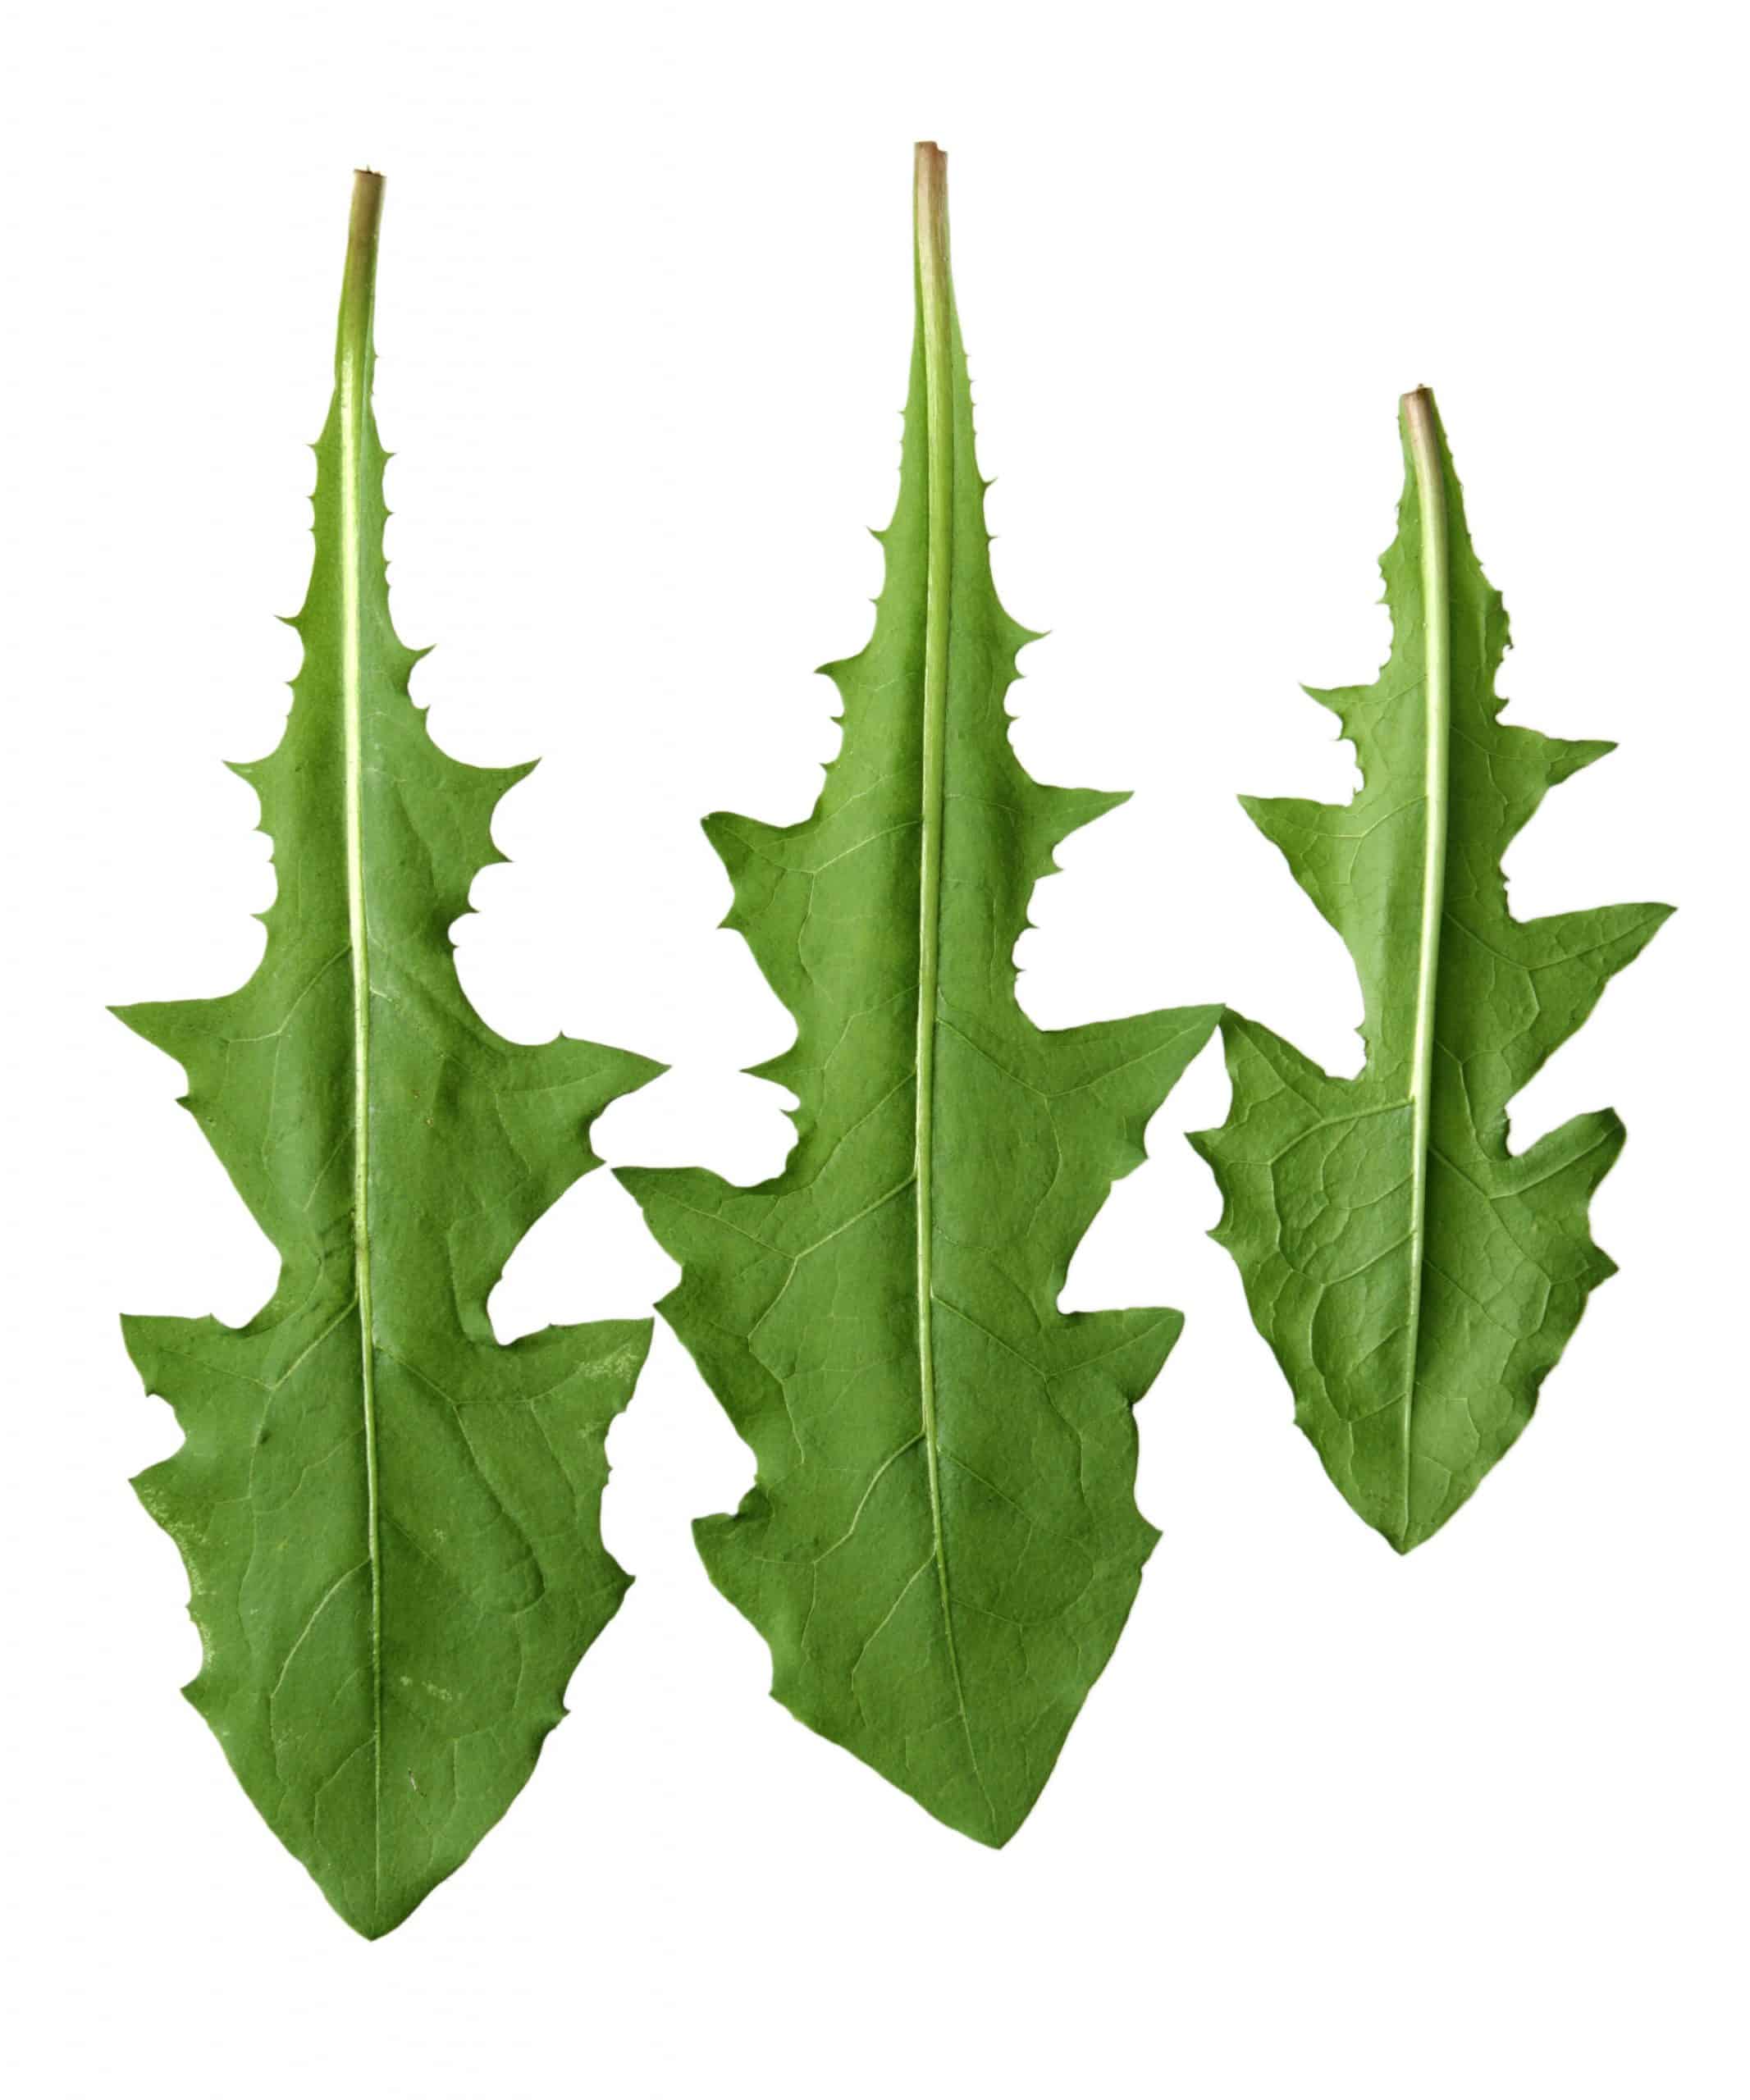 Dandelion leaves shown in isolation